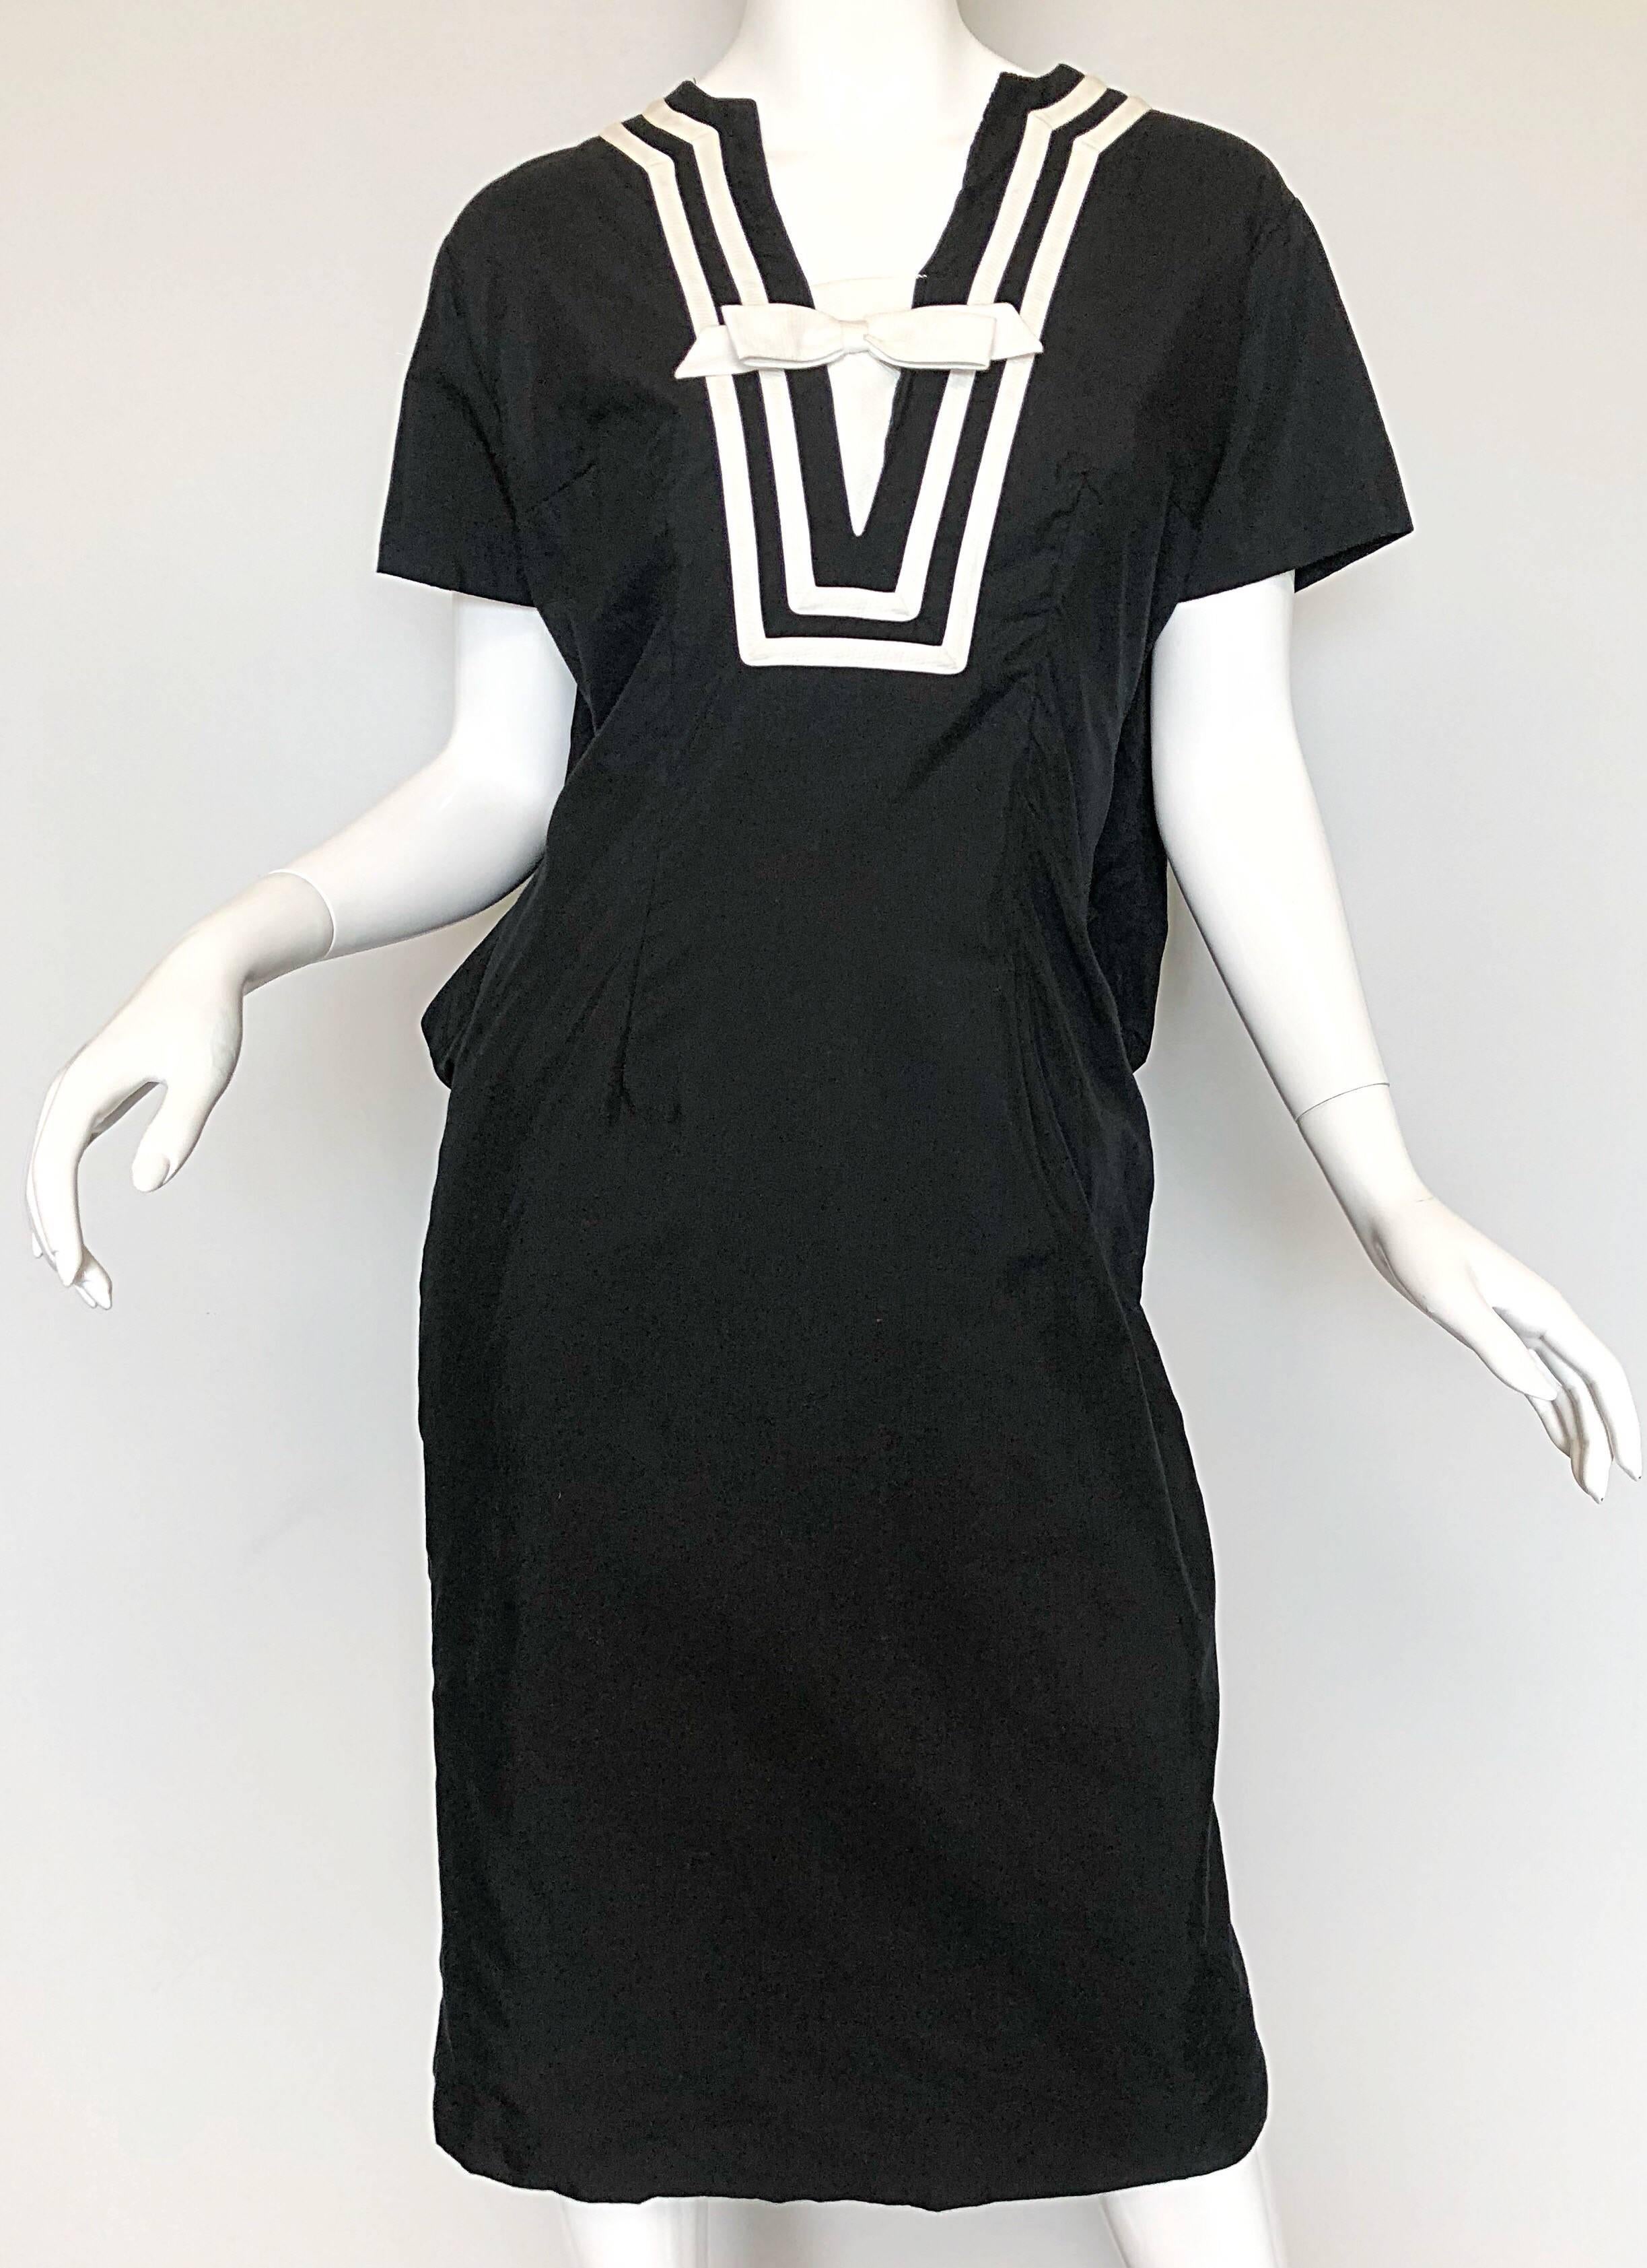 Suzy Perette 1950s Large Size Black and White Nautical Vintage 50s Cotton Dress For Sale 2